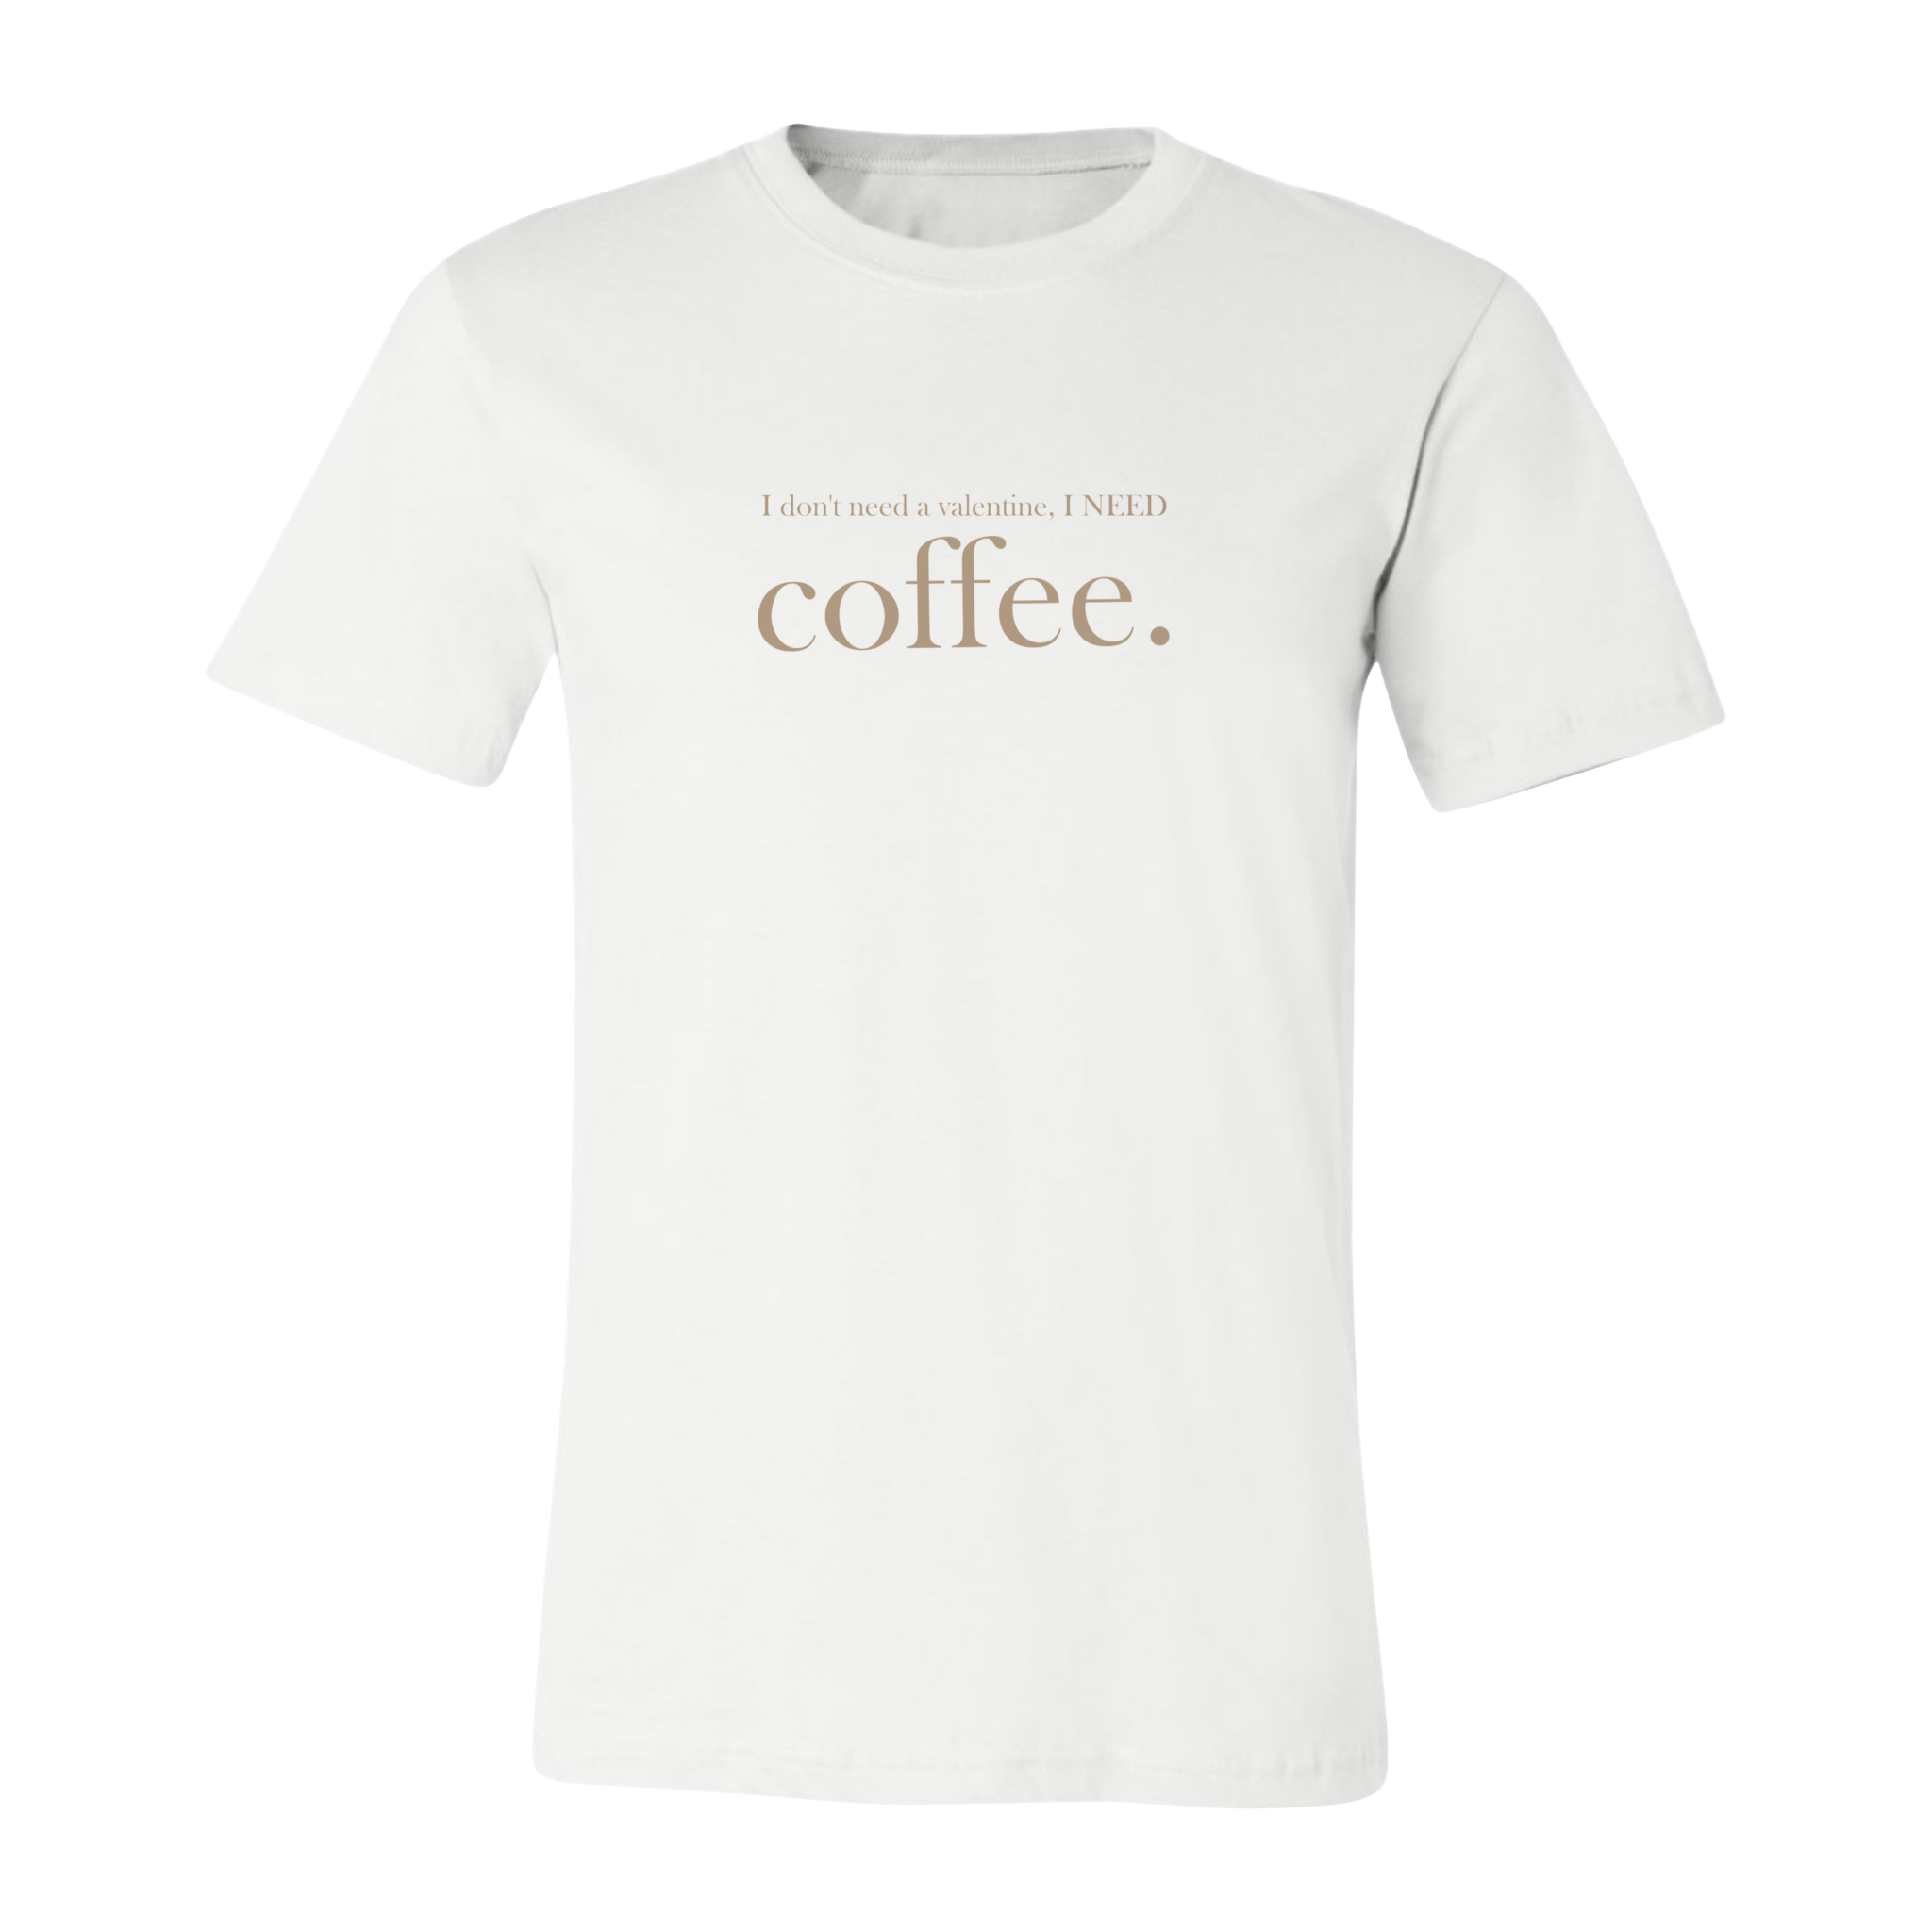 coffee. Shirt